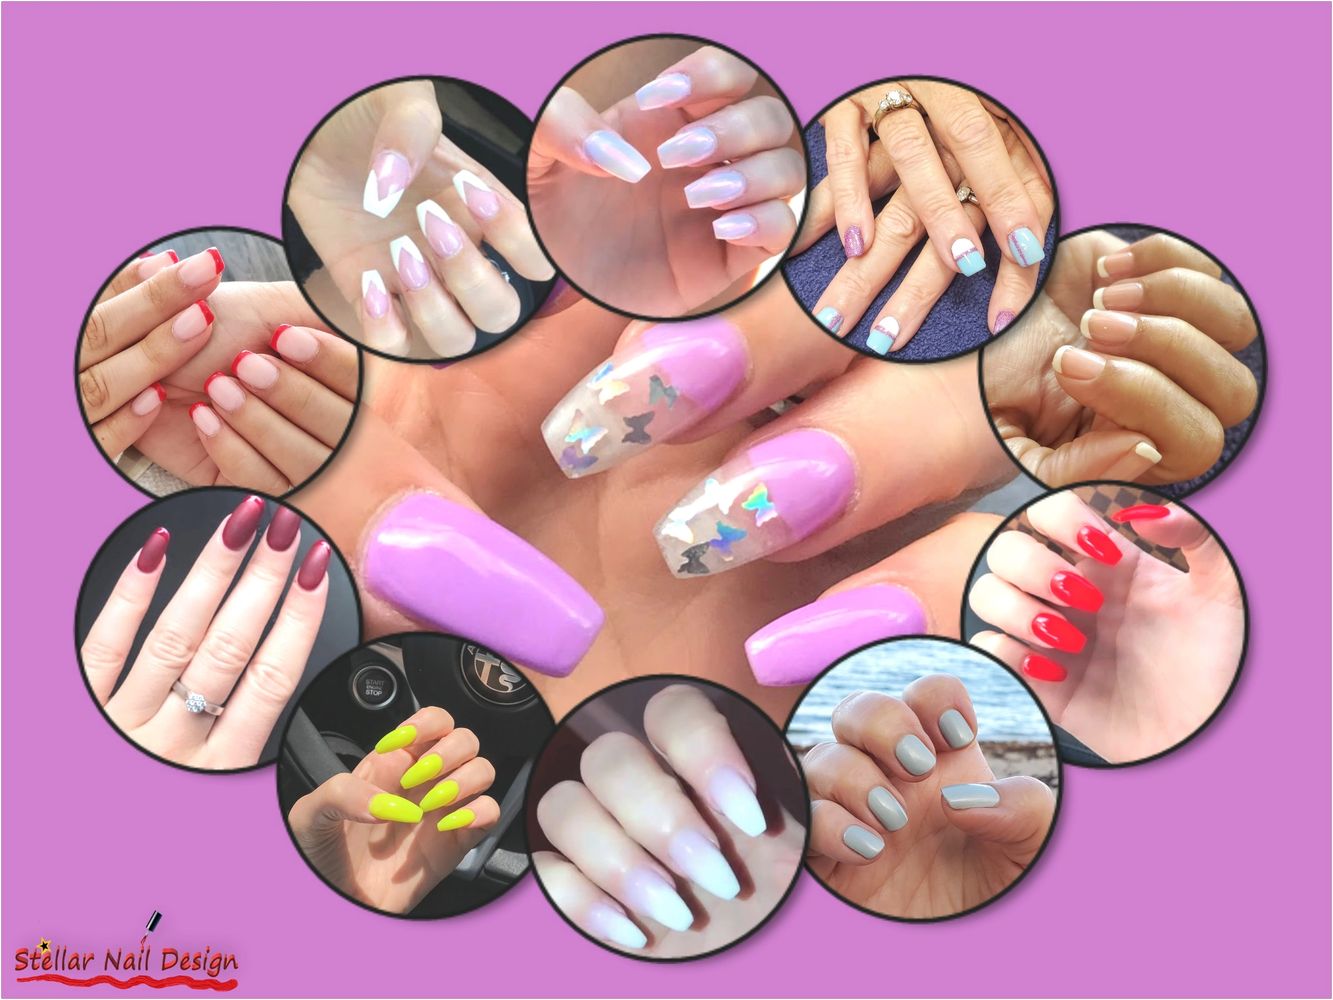 Stellar Nail Design - Nail Salon, Nails, Pedicure, Manicure